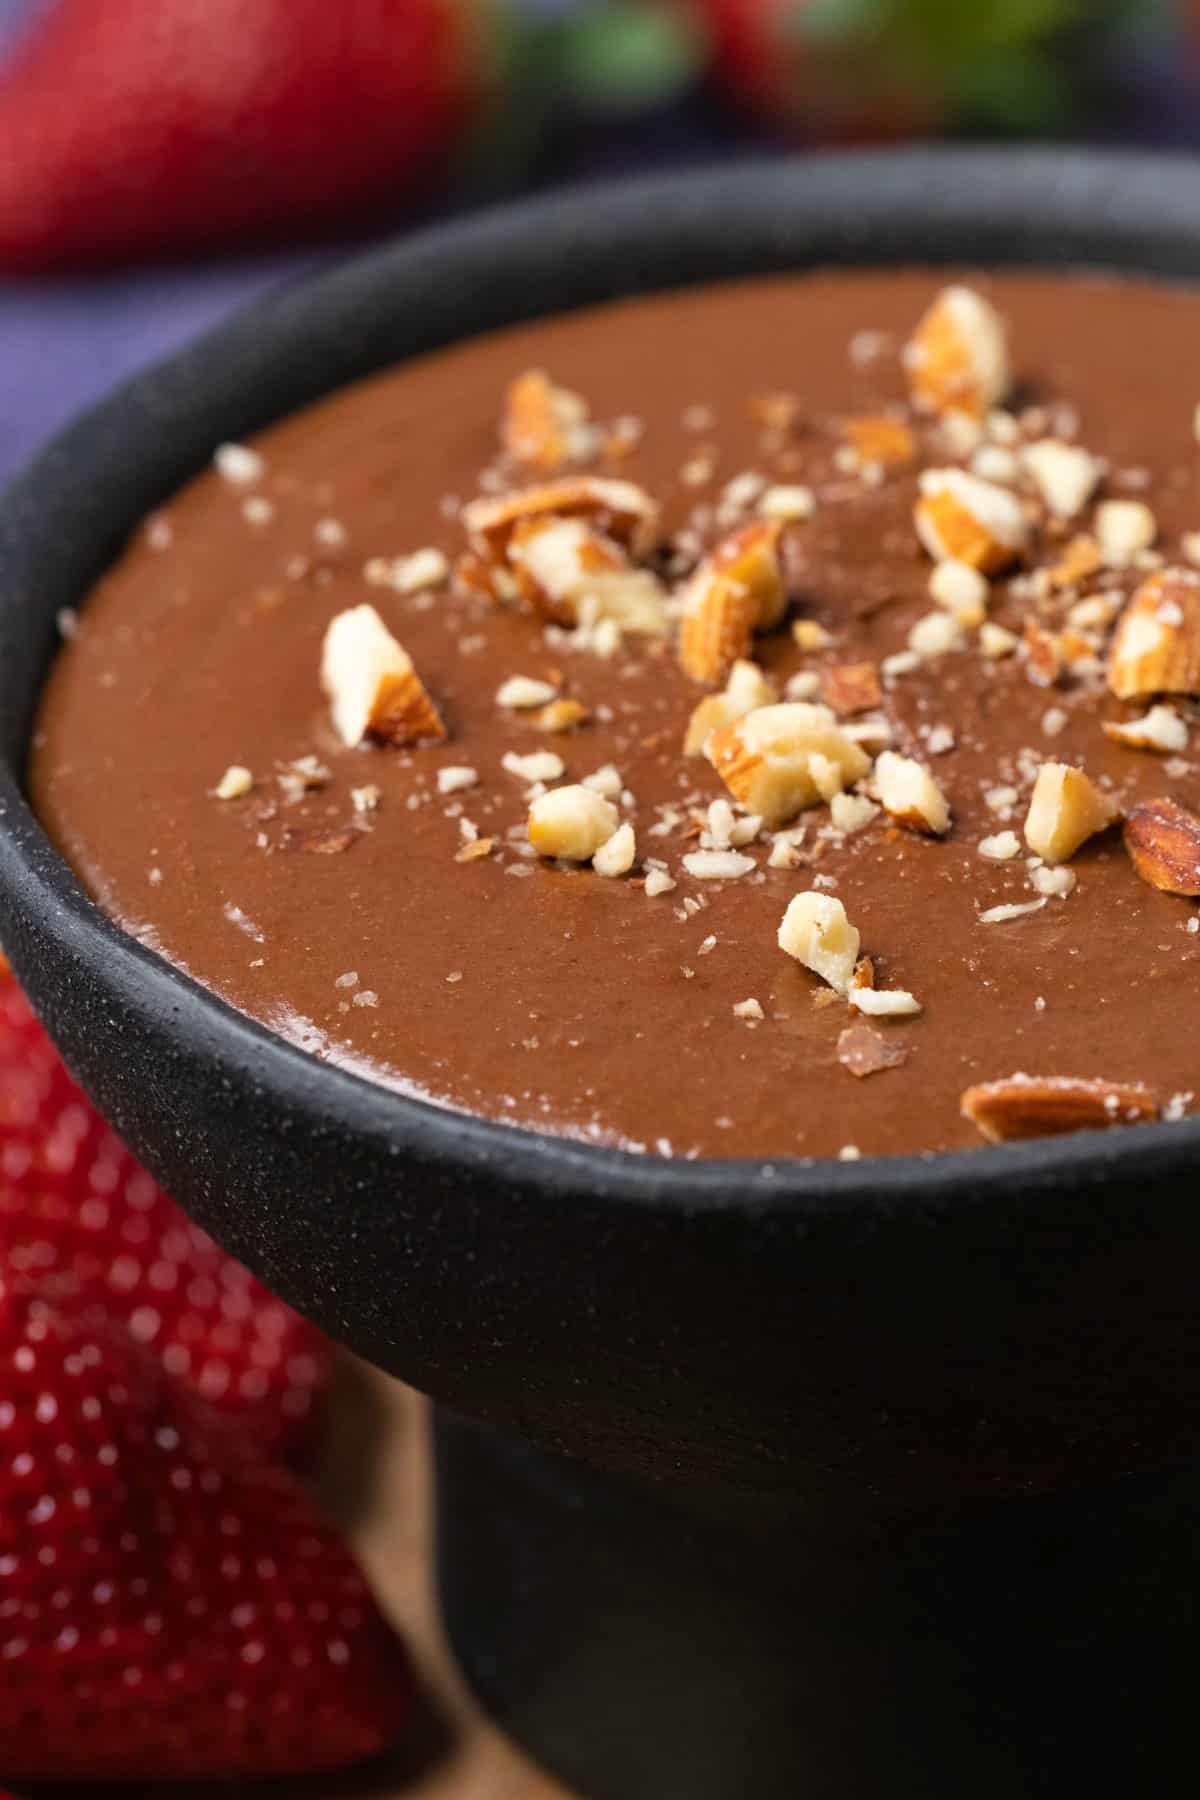 Chocolate hummus in a black bowl.